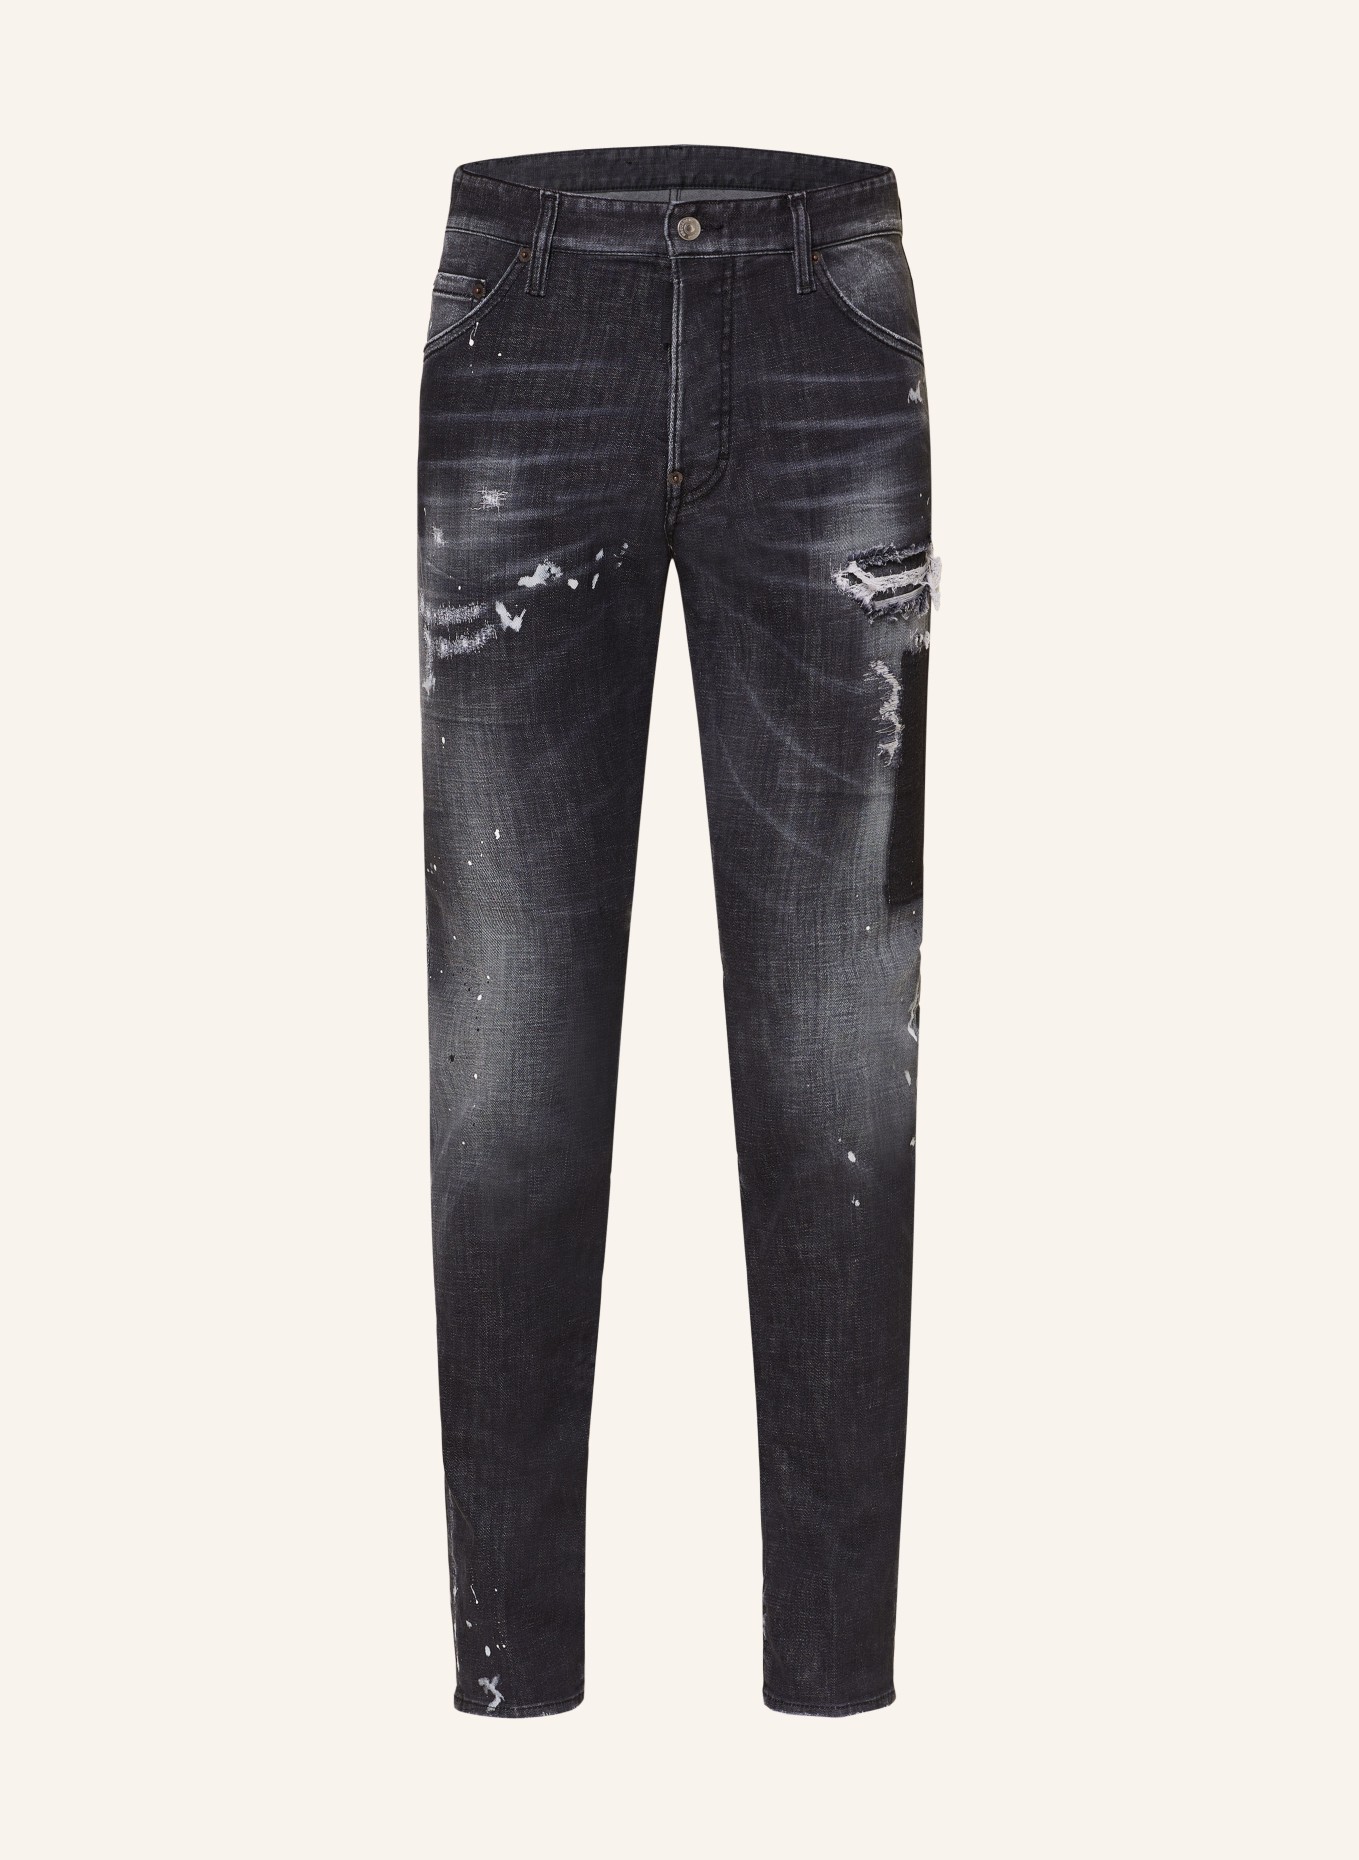 DSQUARED2 Destroyed Jeans COOL GUY Slim Fit, Farbe: 900  black (Bild 1)